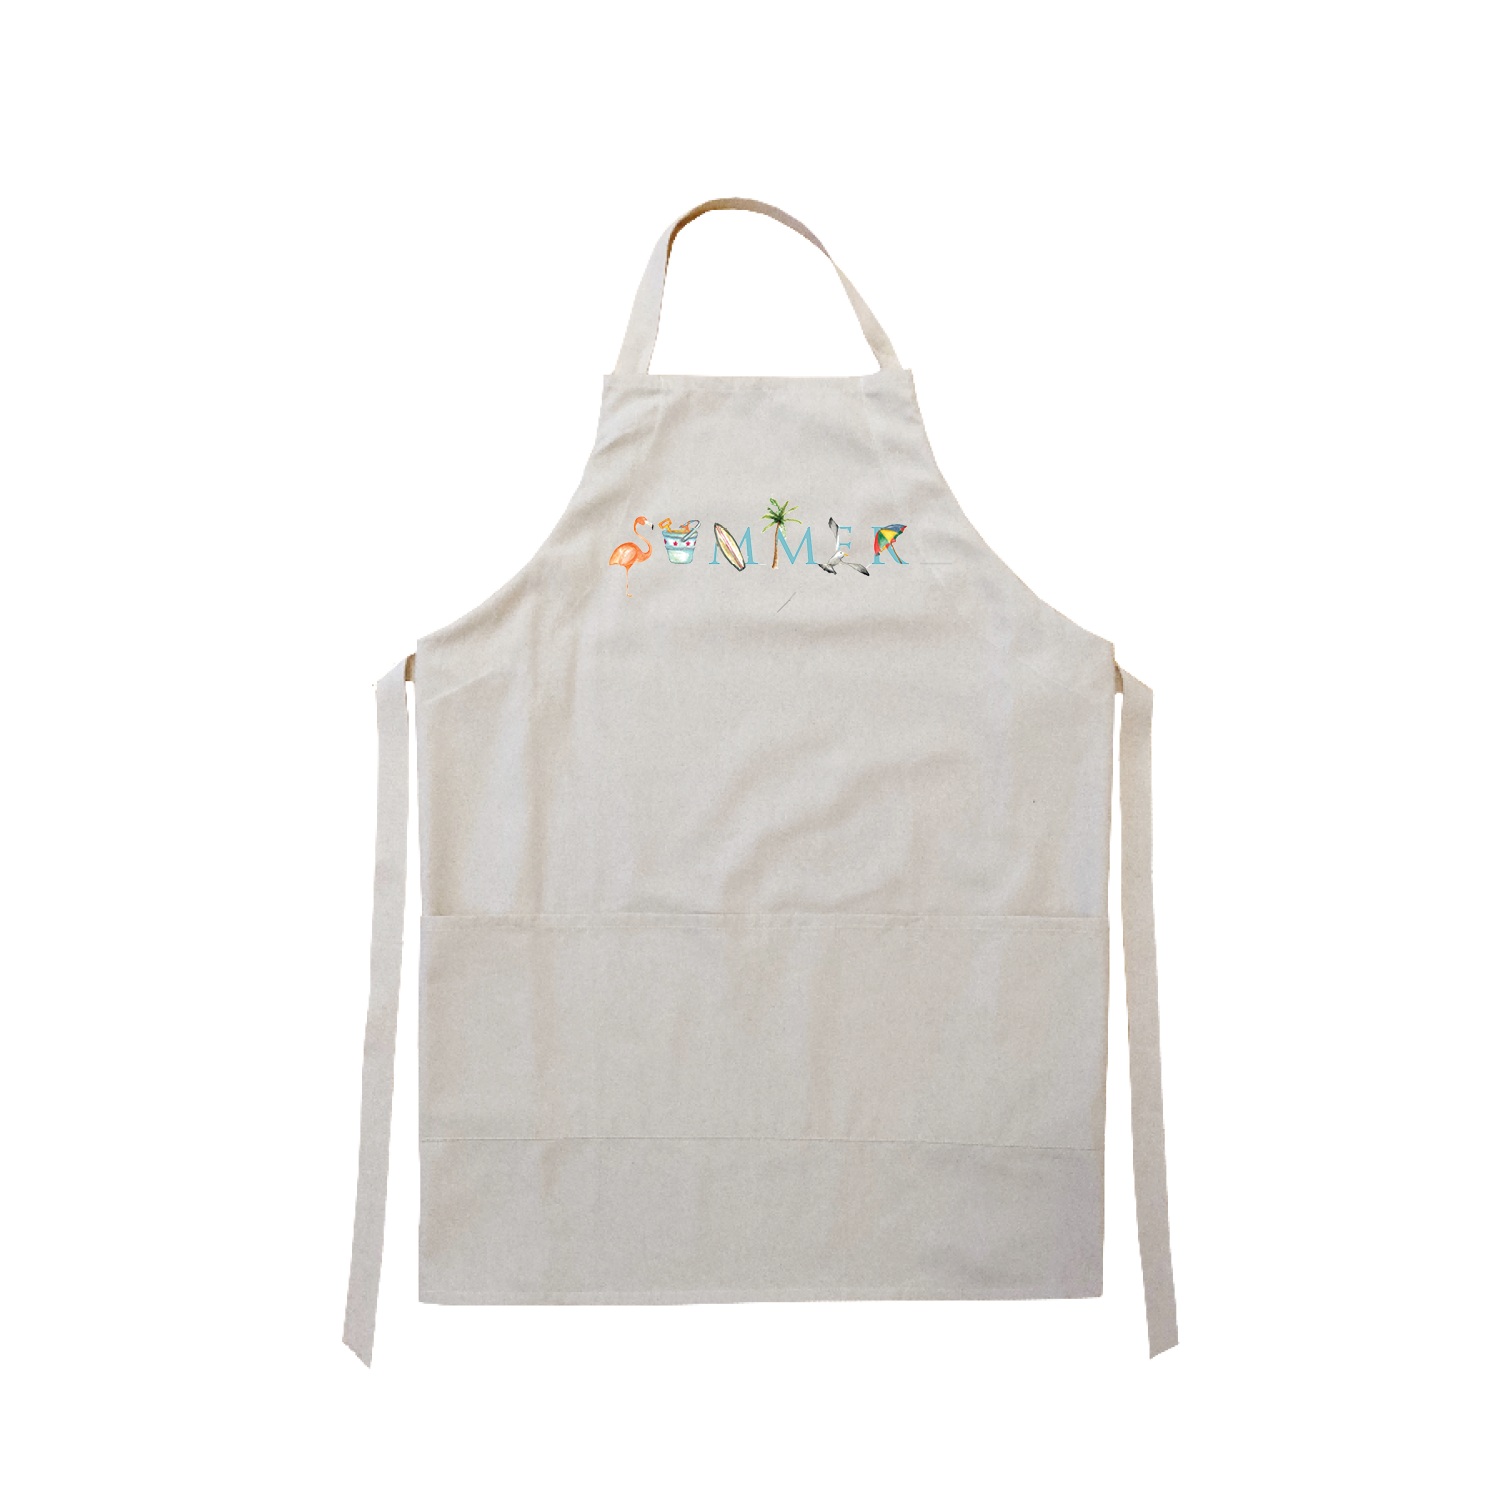 Summer apron